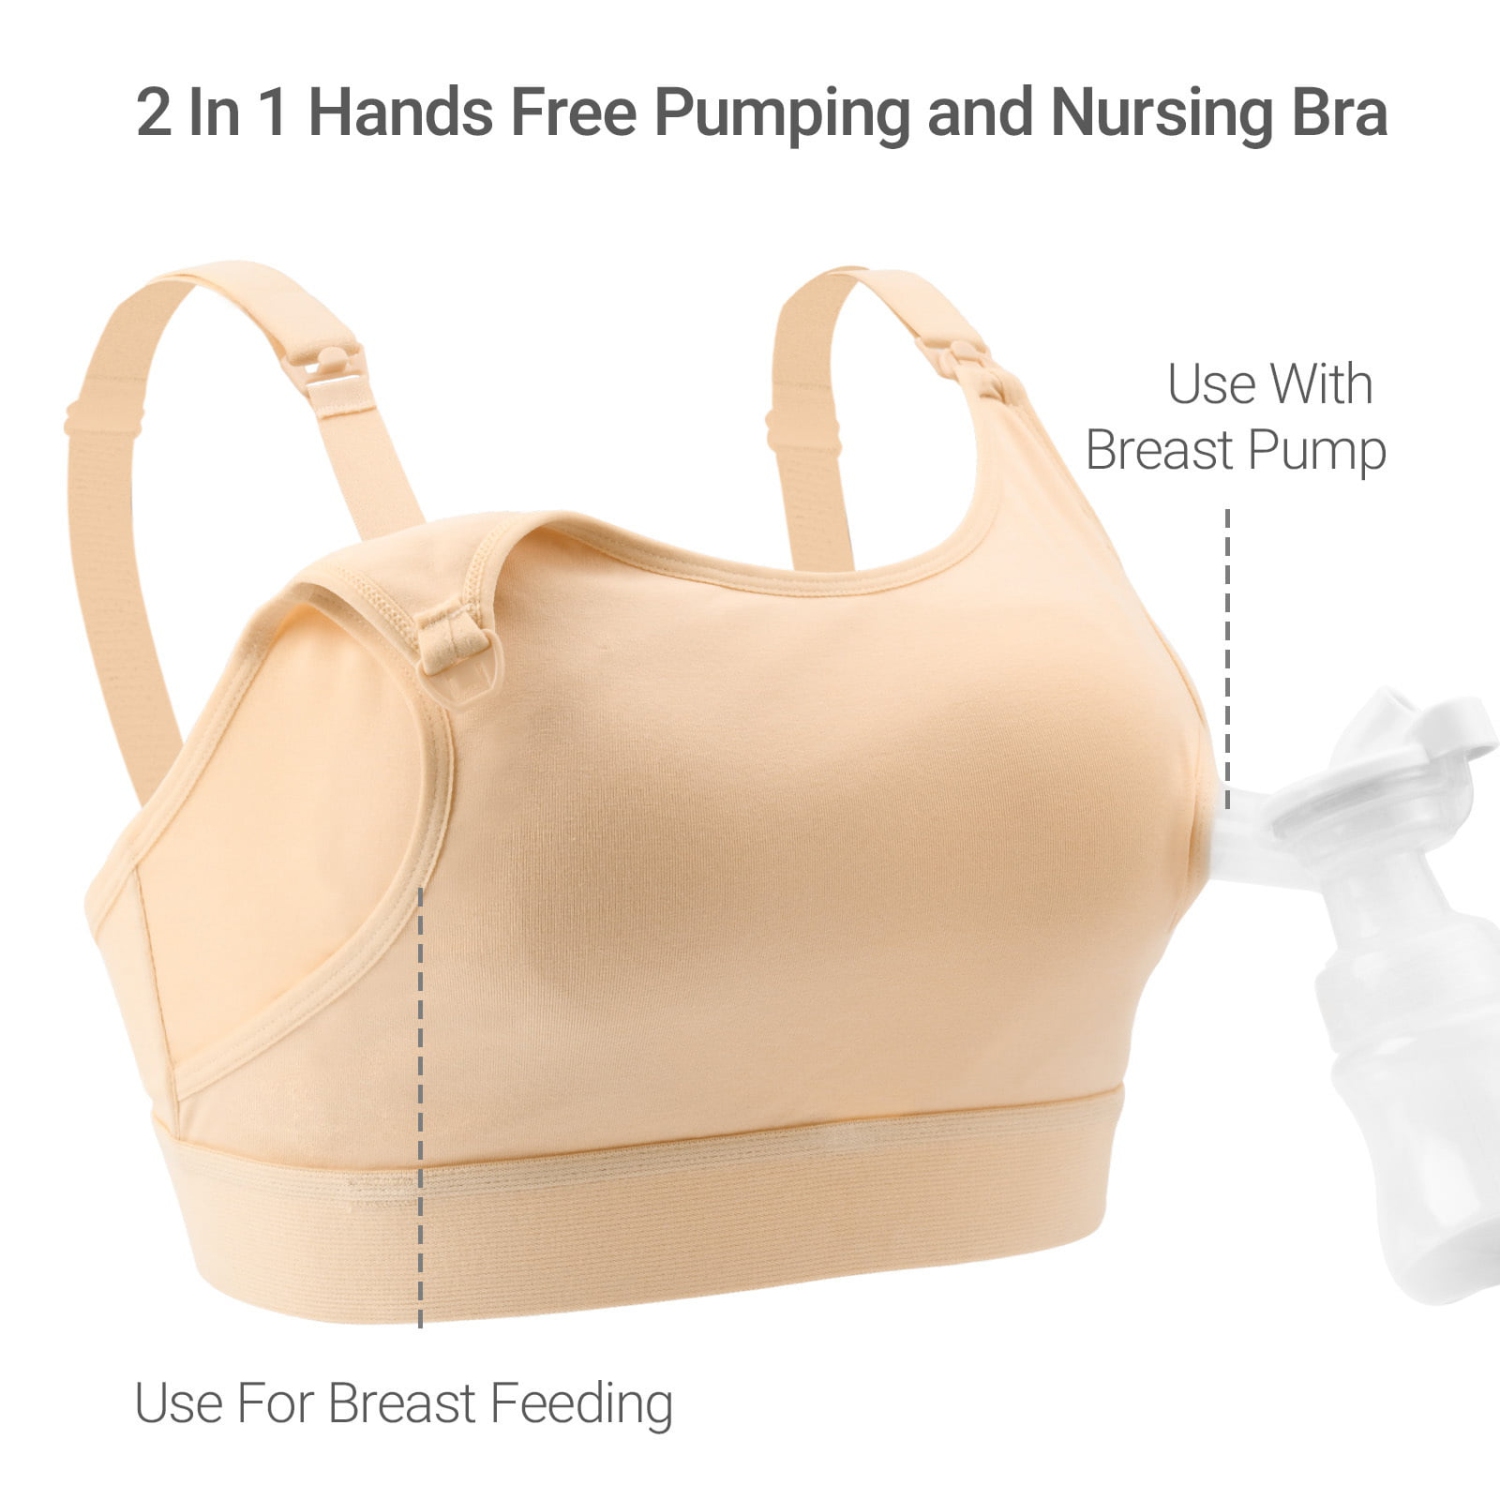 Hands Free Pumping Bra,adjustable Breast-pump Holding And Nursing Bra